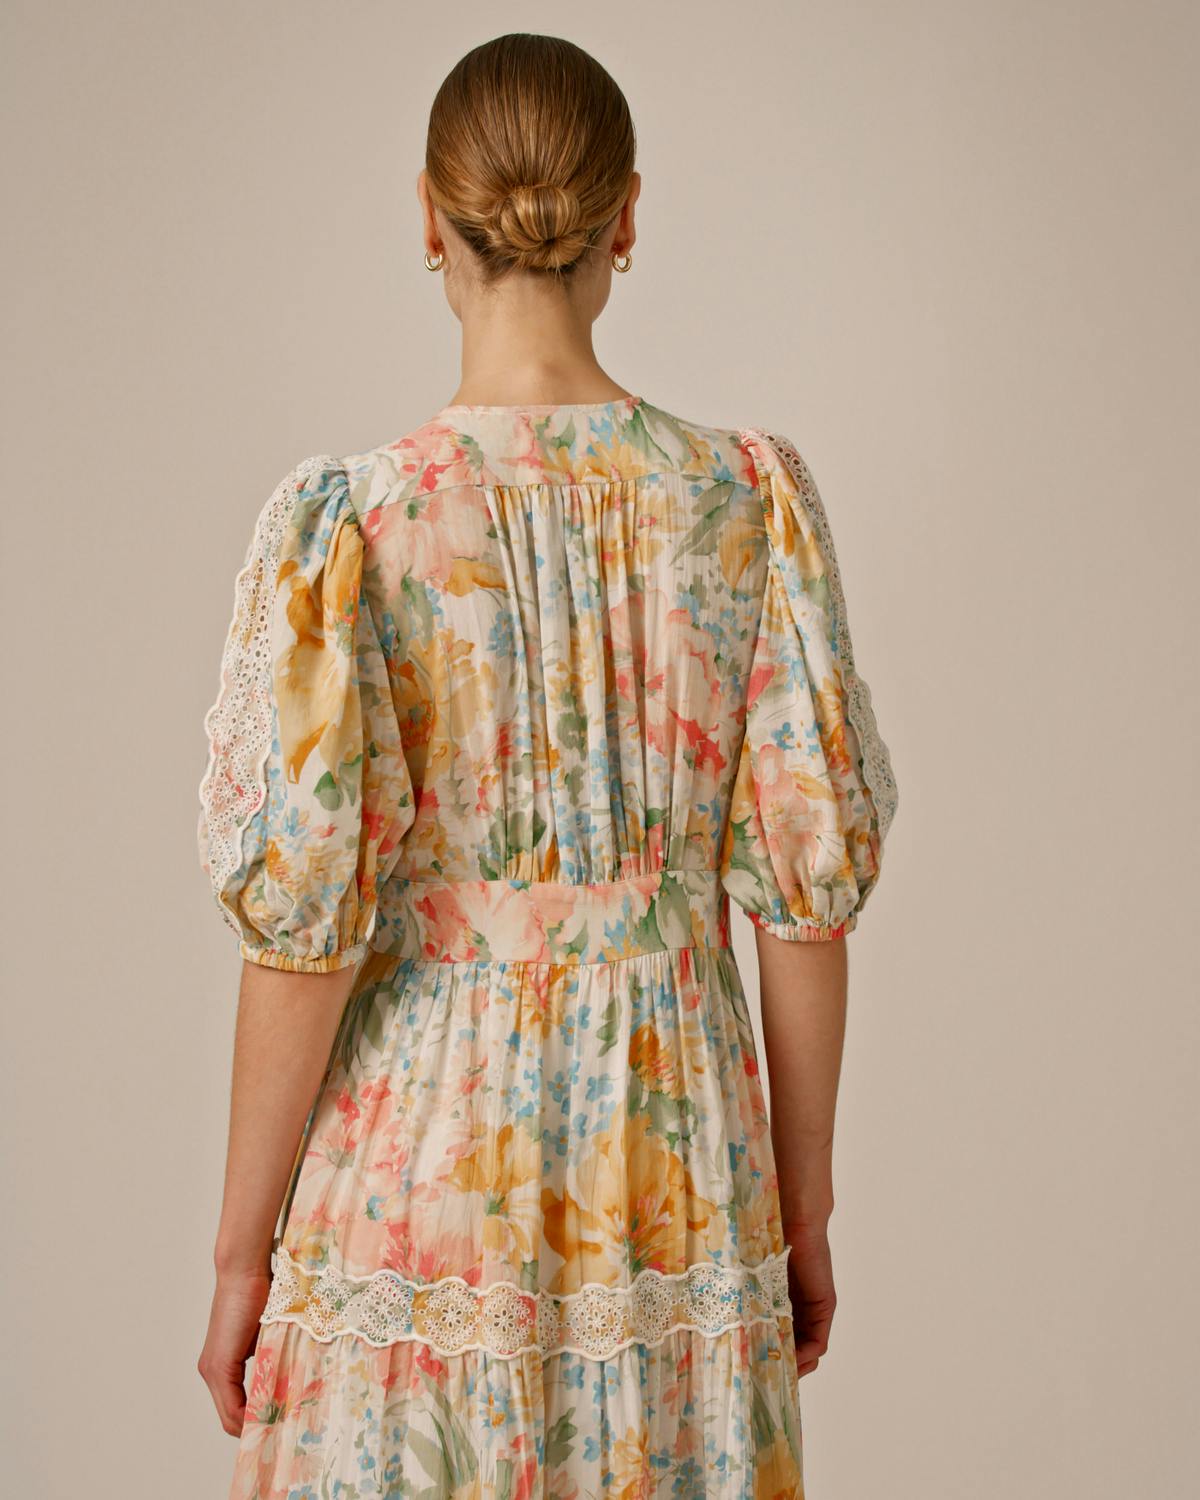 Cotton Slub Tiered Dress, Blooming Pastels. Image #3